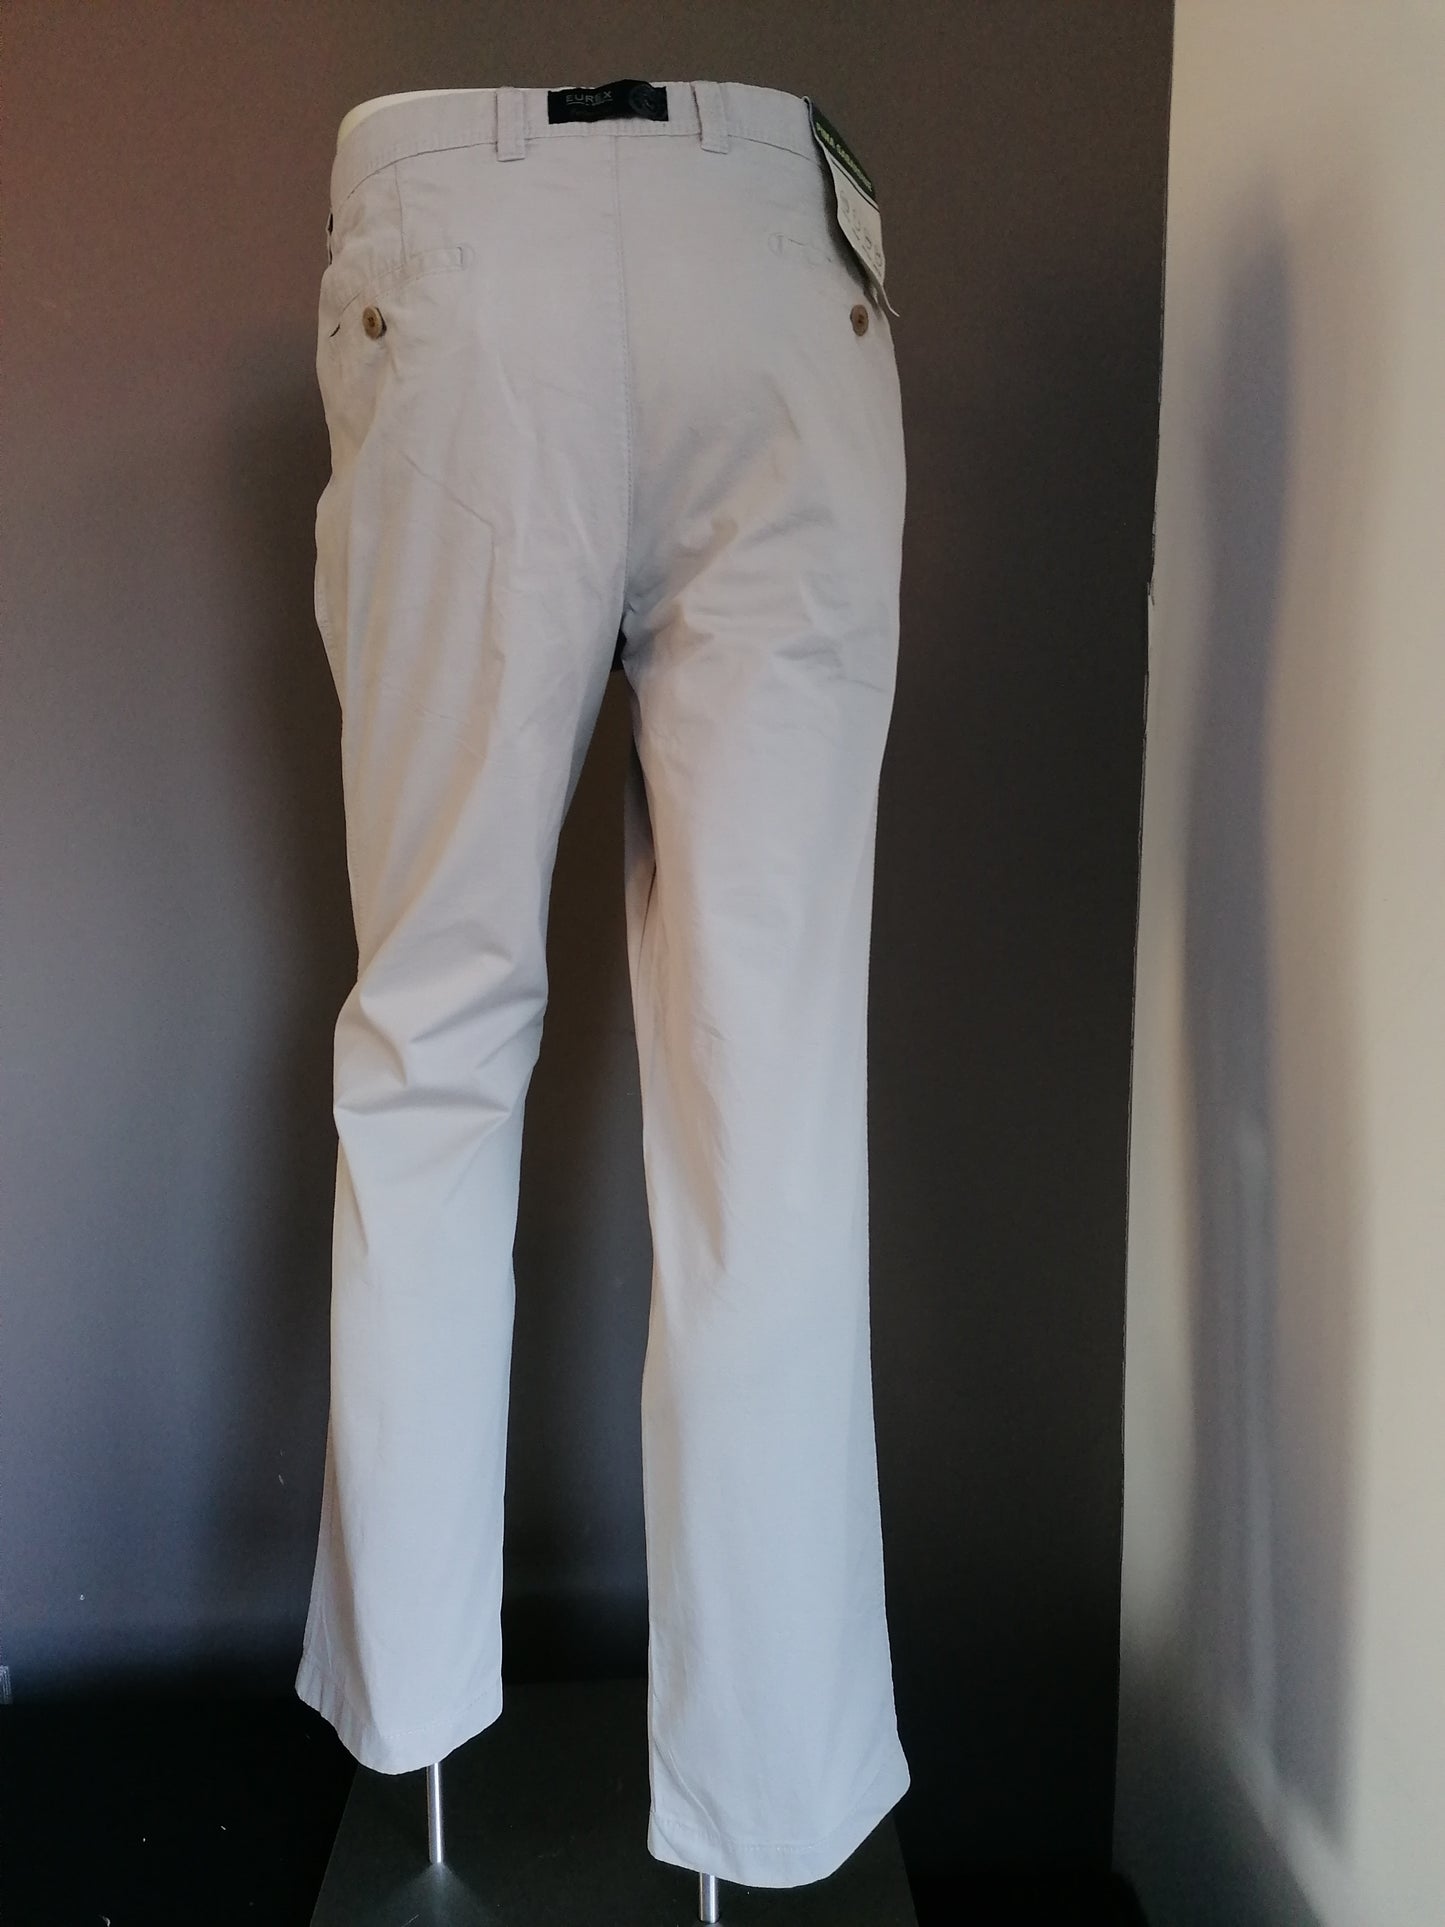 EUREX / Brax pants / trousers. Beige colored. Size 27. "PIMA GABARDINE" NEW!